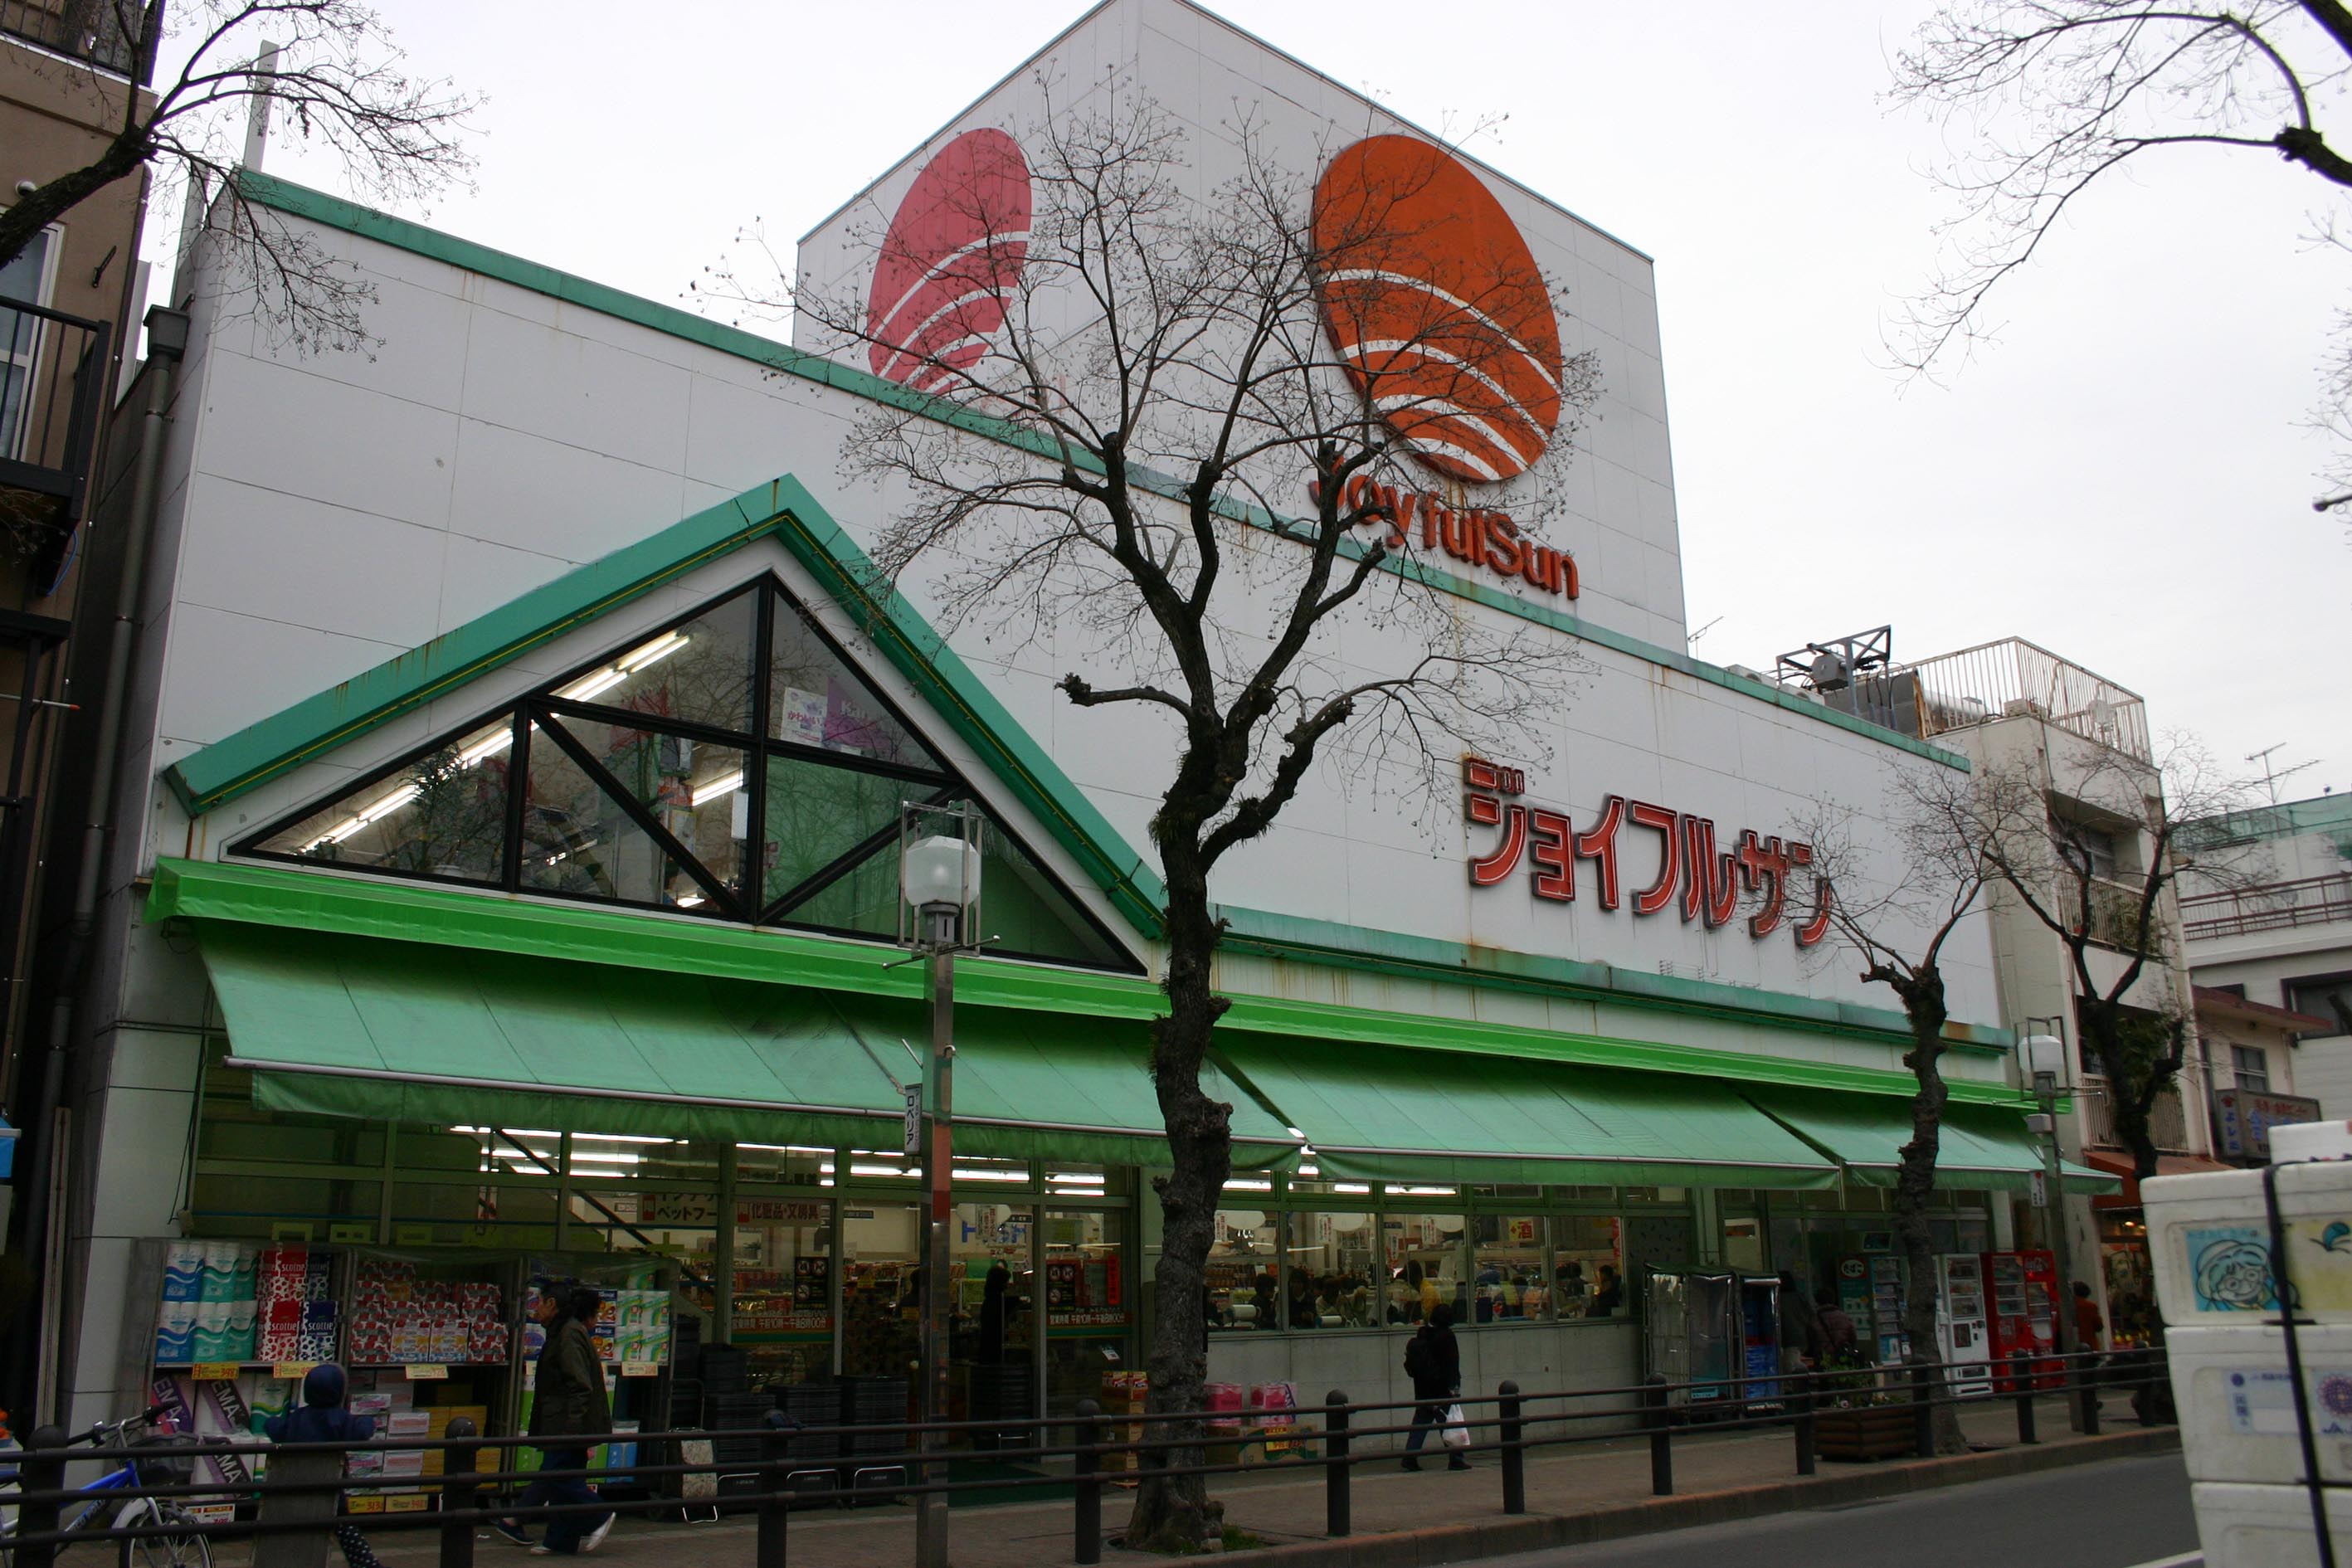 Supermarket. 259m until Joyful San Joei store (Super)